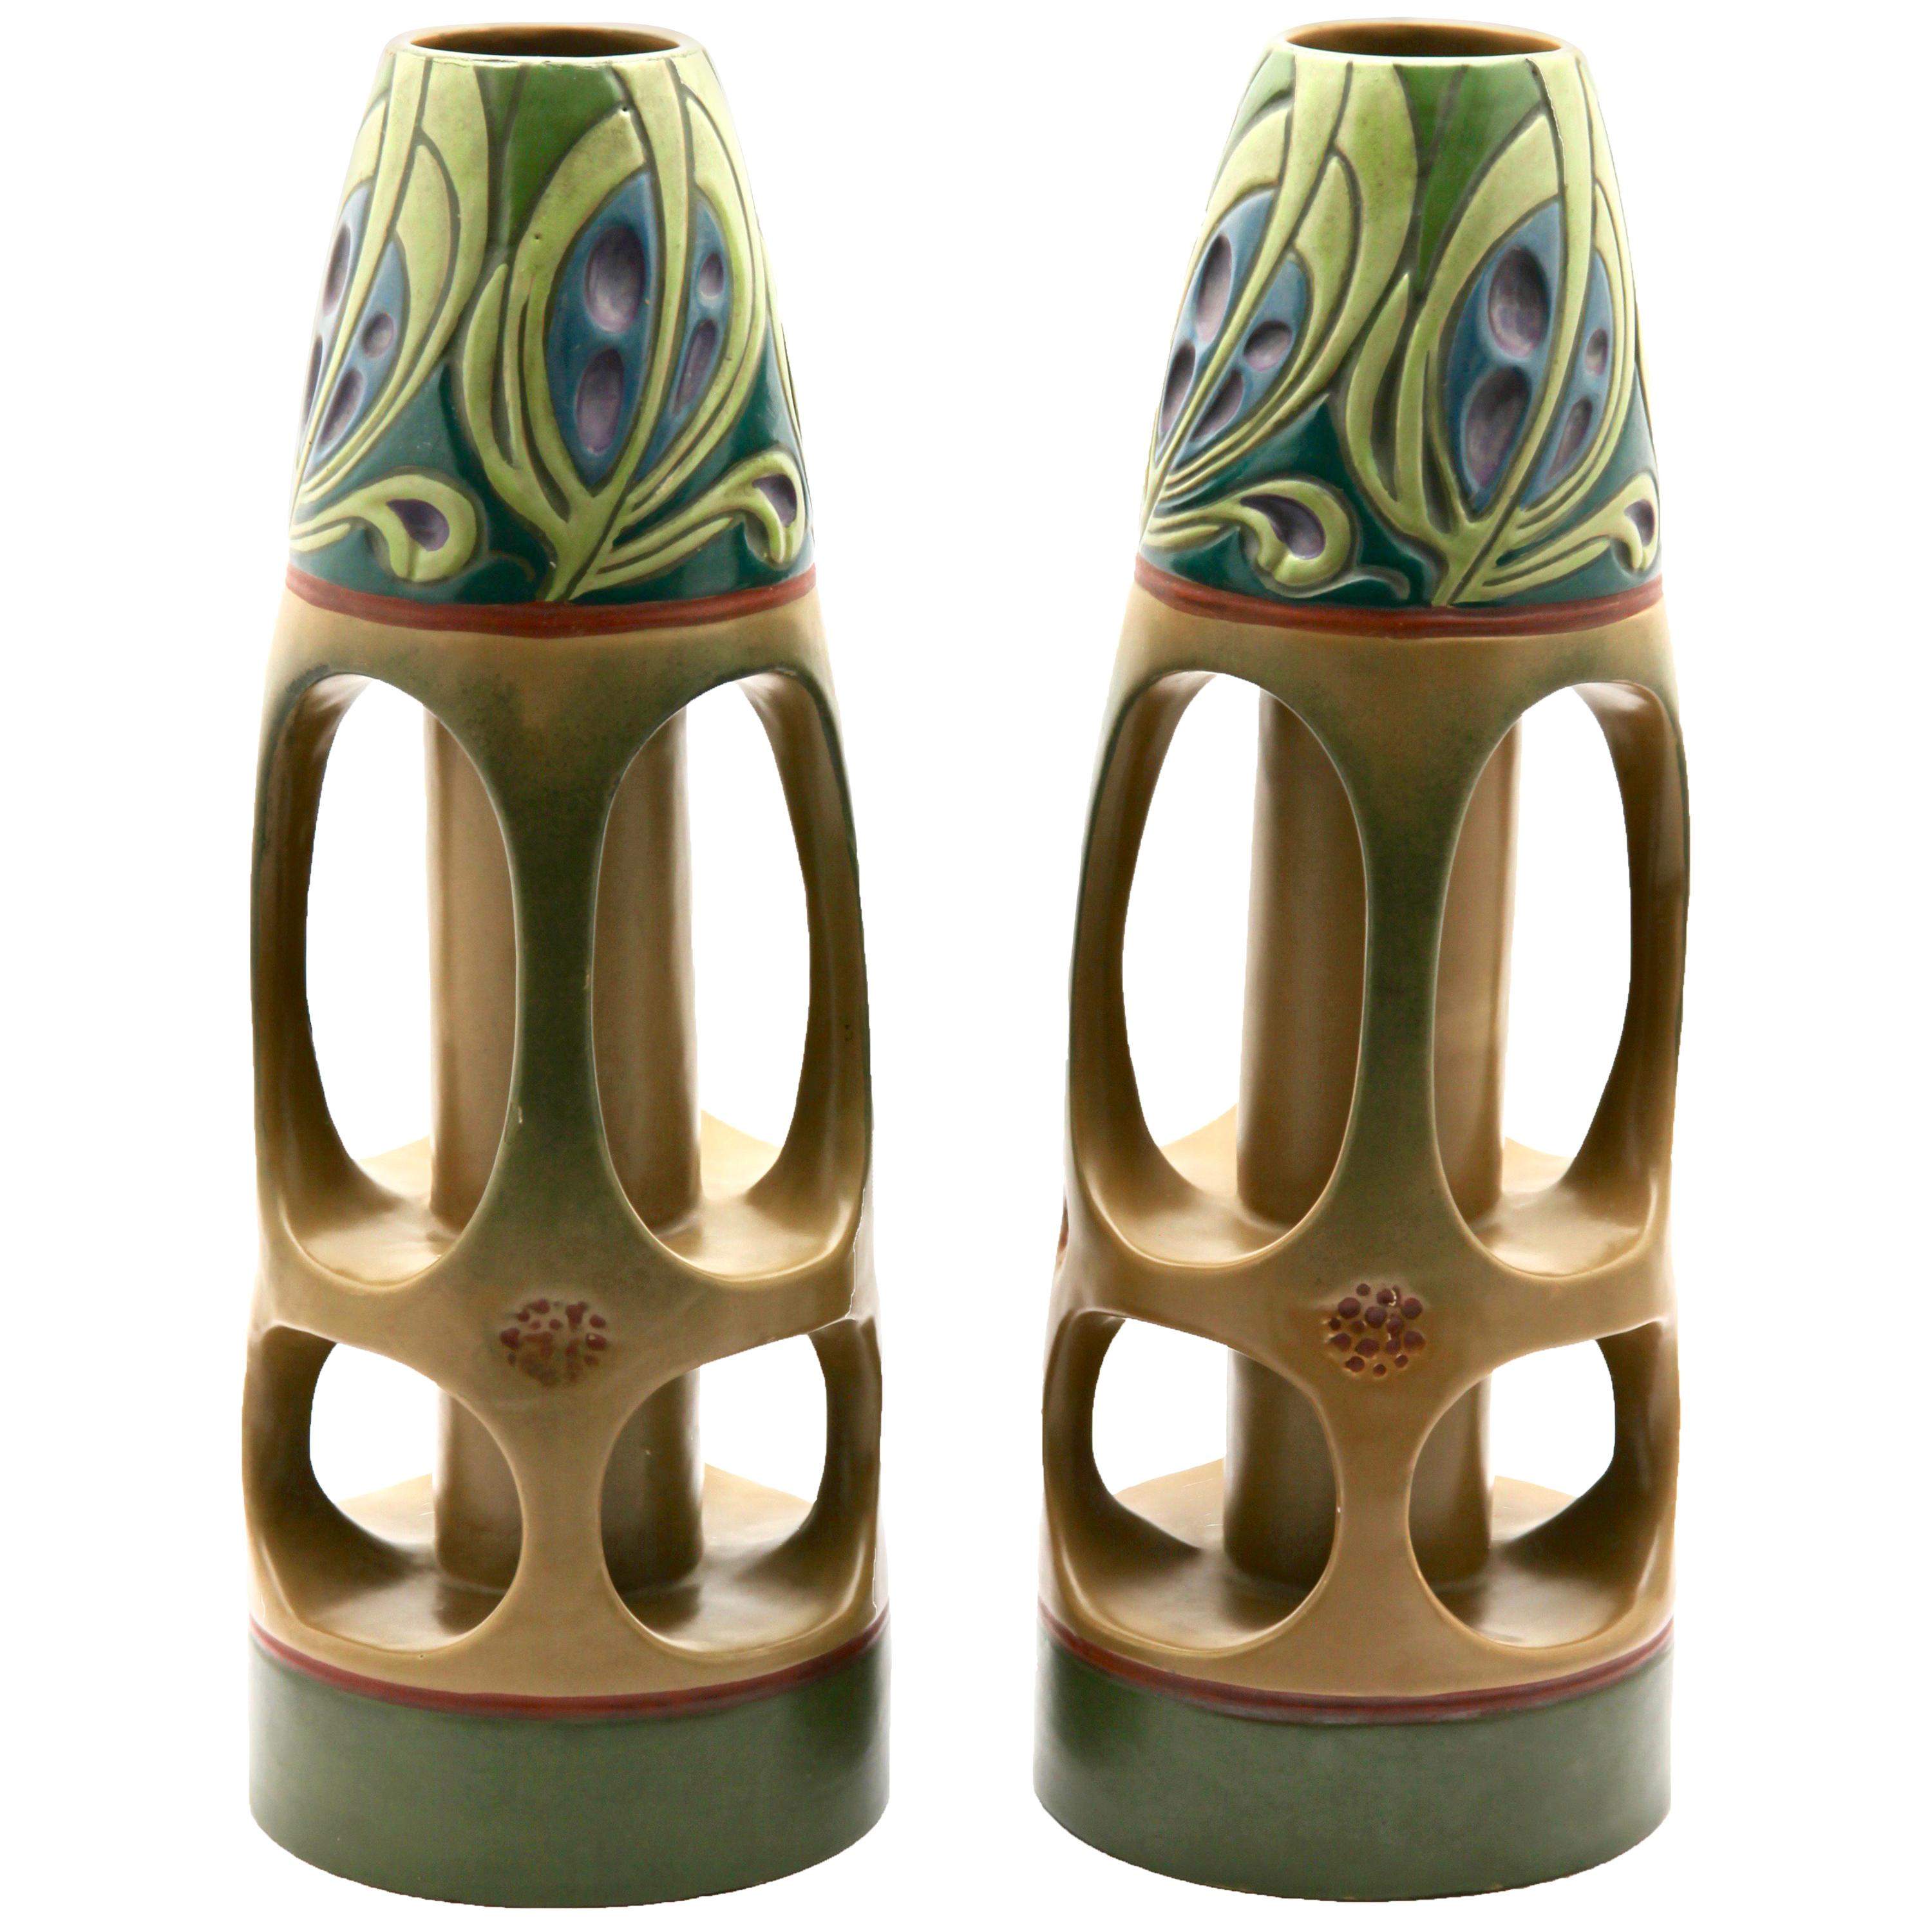 Pair of Art Nouveau Vases, 'Amphora' by Julius Dressler, Vienna, circa 1905